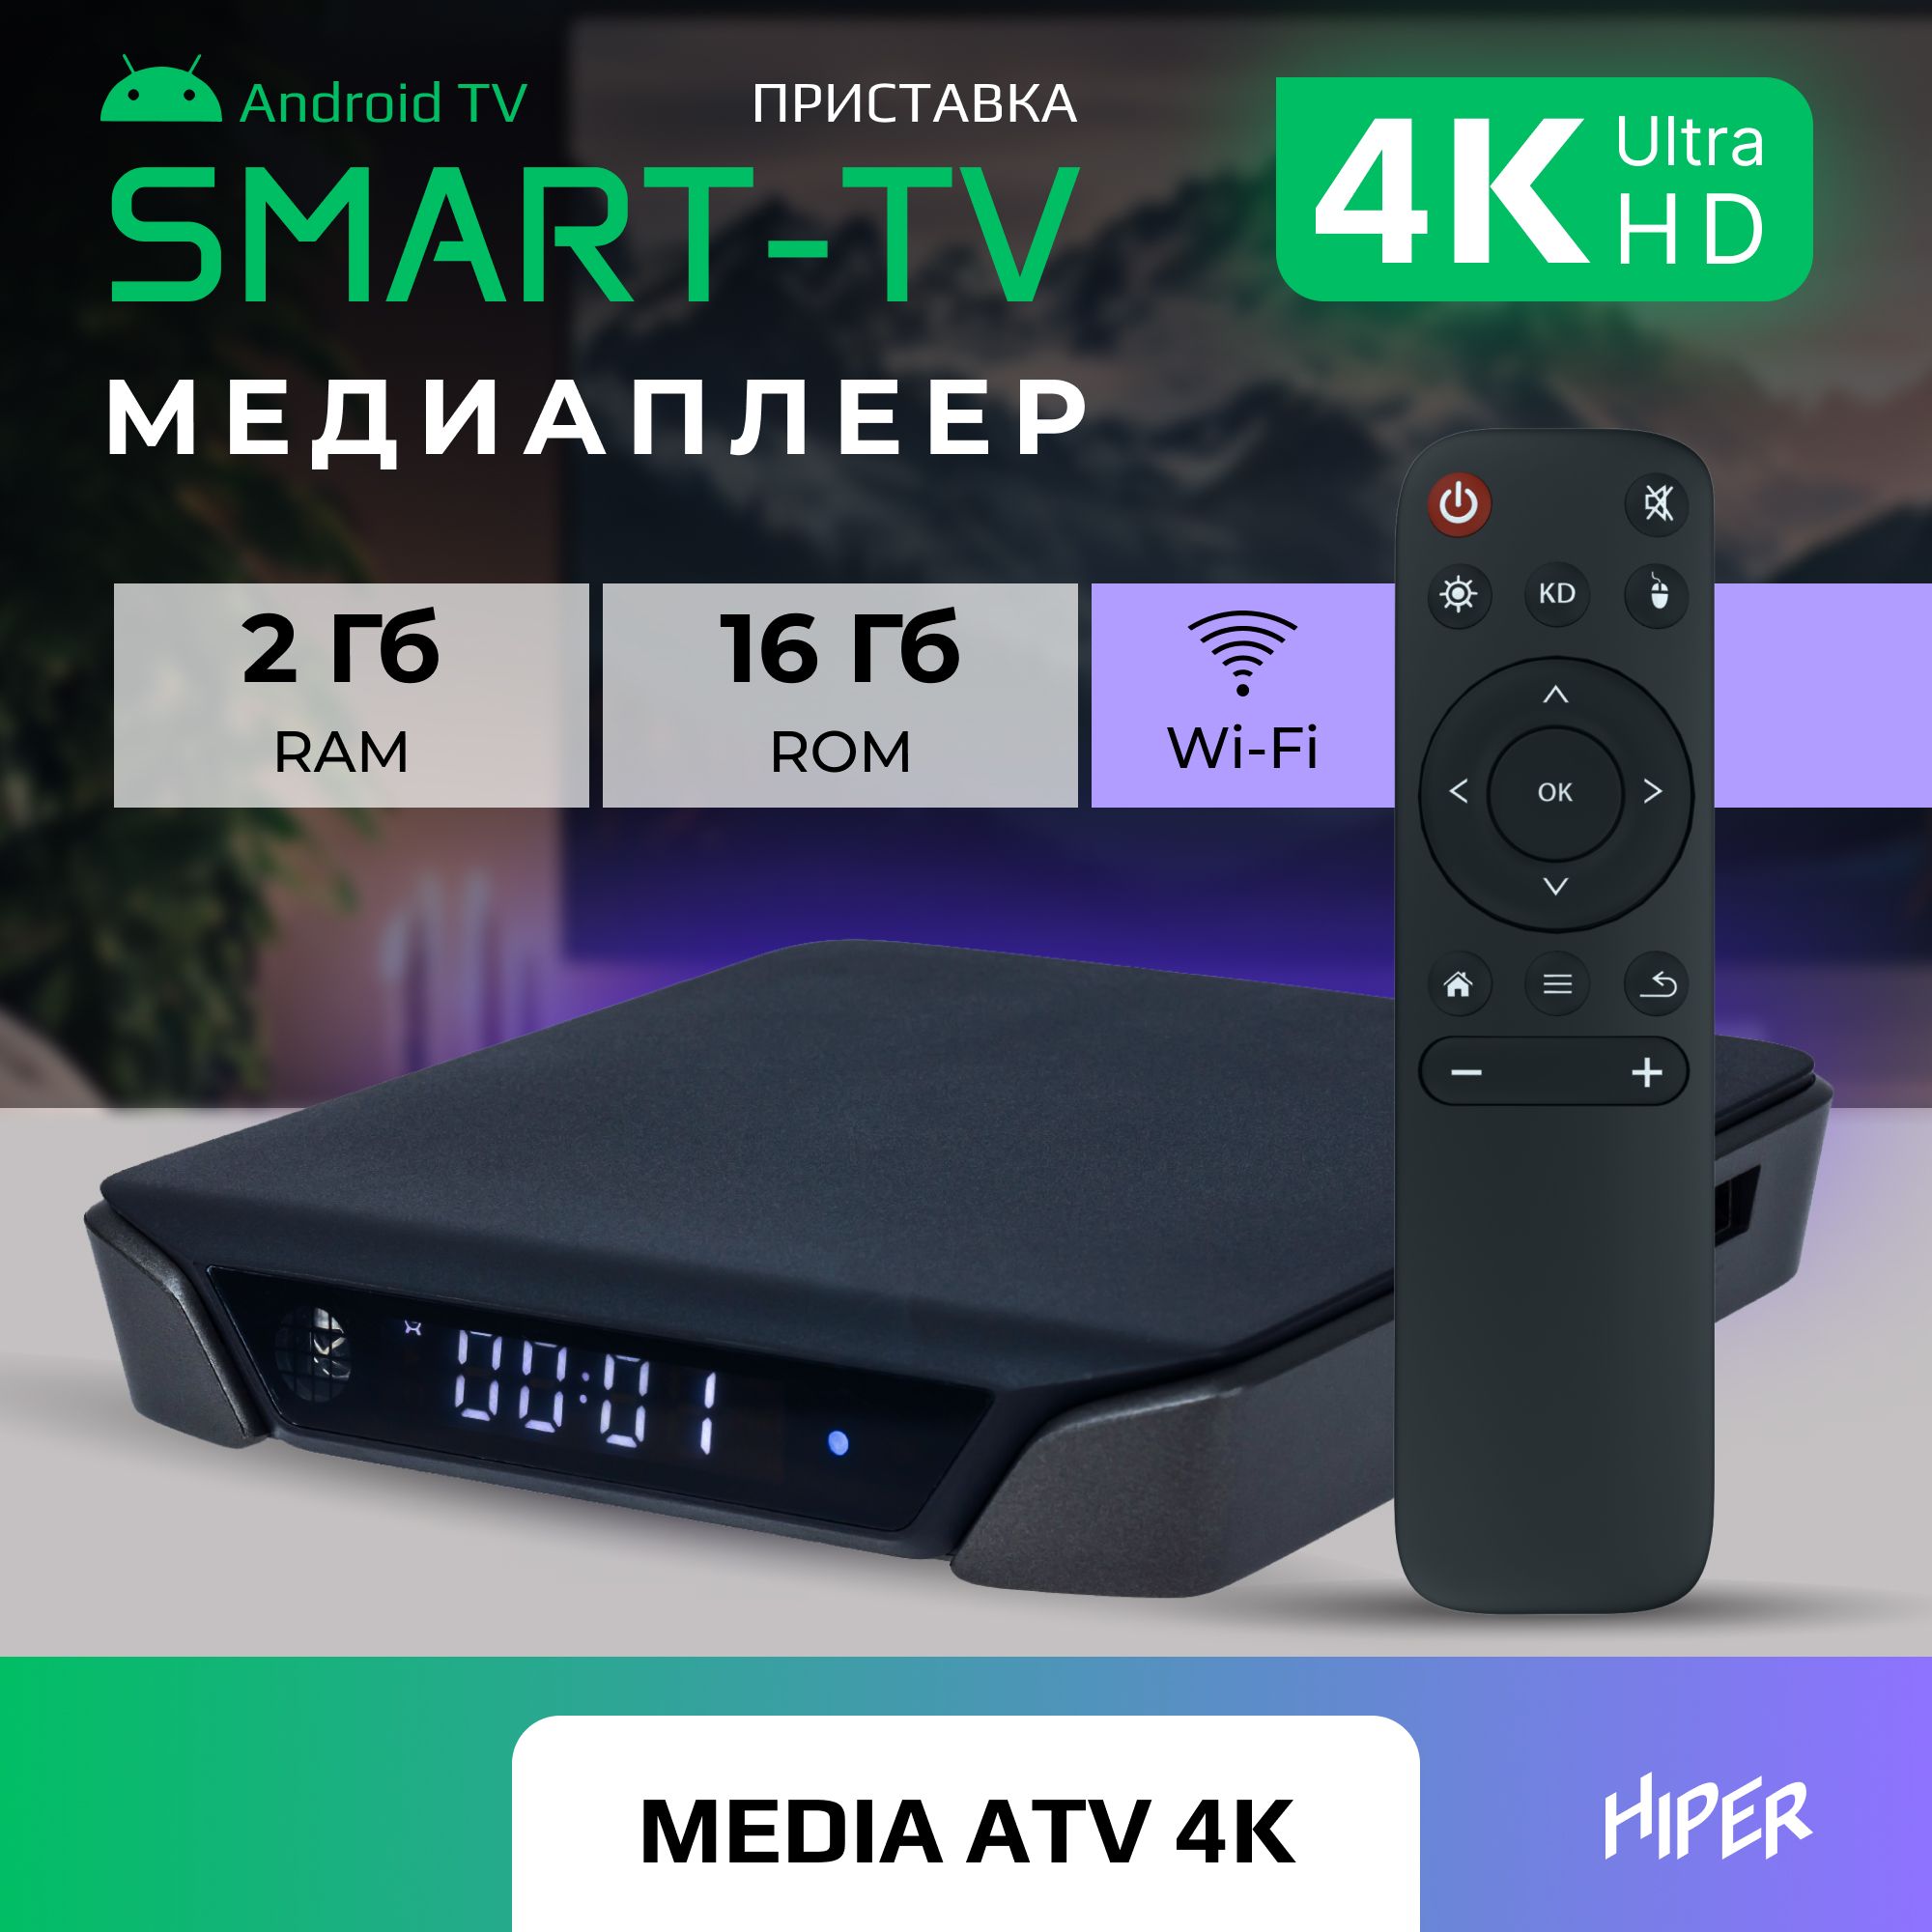 Smart-TV приставка HIPER MEDIA ATV 4K ultra HD, HDR, Android TV, 16 Gb, 2 Gb (RAM), Wi-Fi - купить в ОЛДИ, цена на Мегамаркет